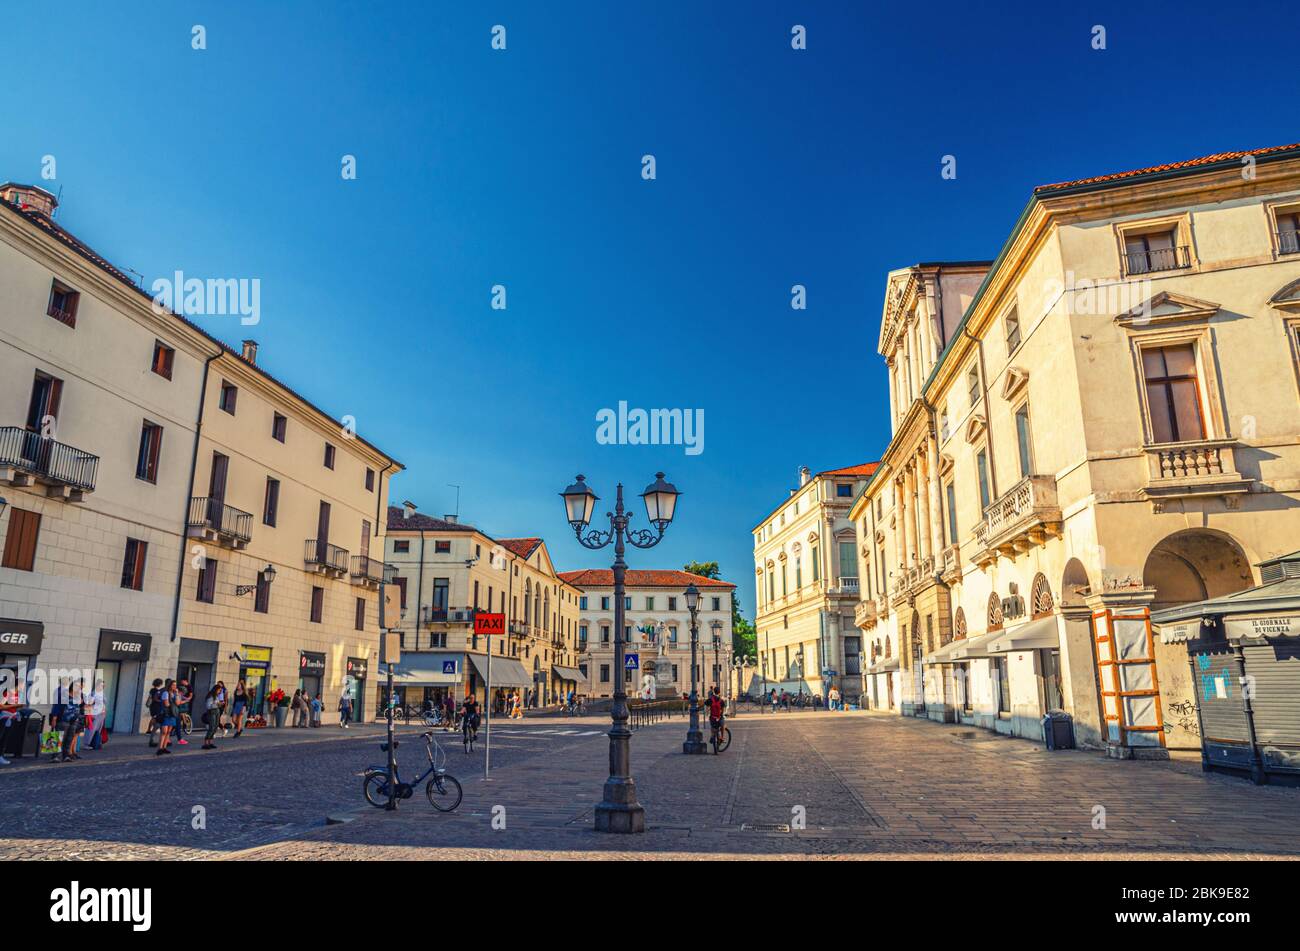 Vicenza, Italy, September 12, 2019: building and street light in Piazza del Castello cobblestone square in old historical city centre, blue sky background, Veneto region Stock Photo